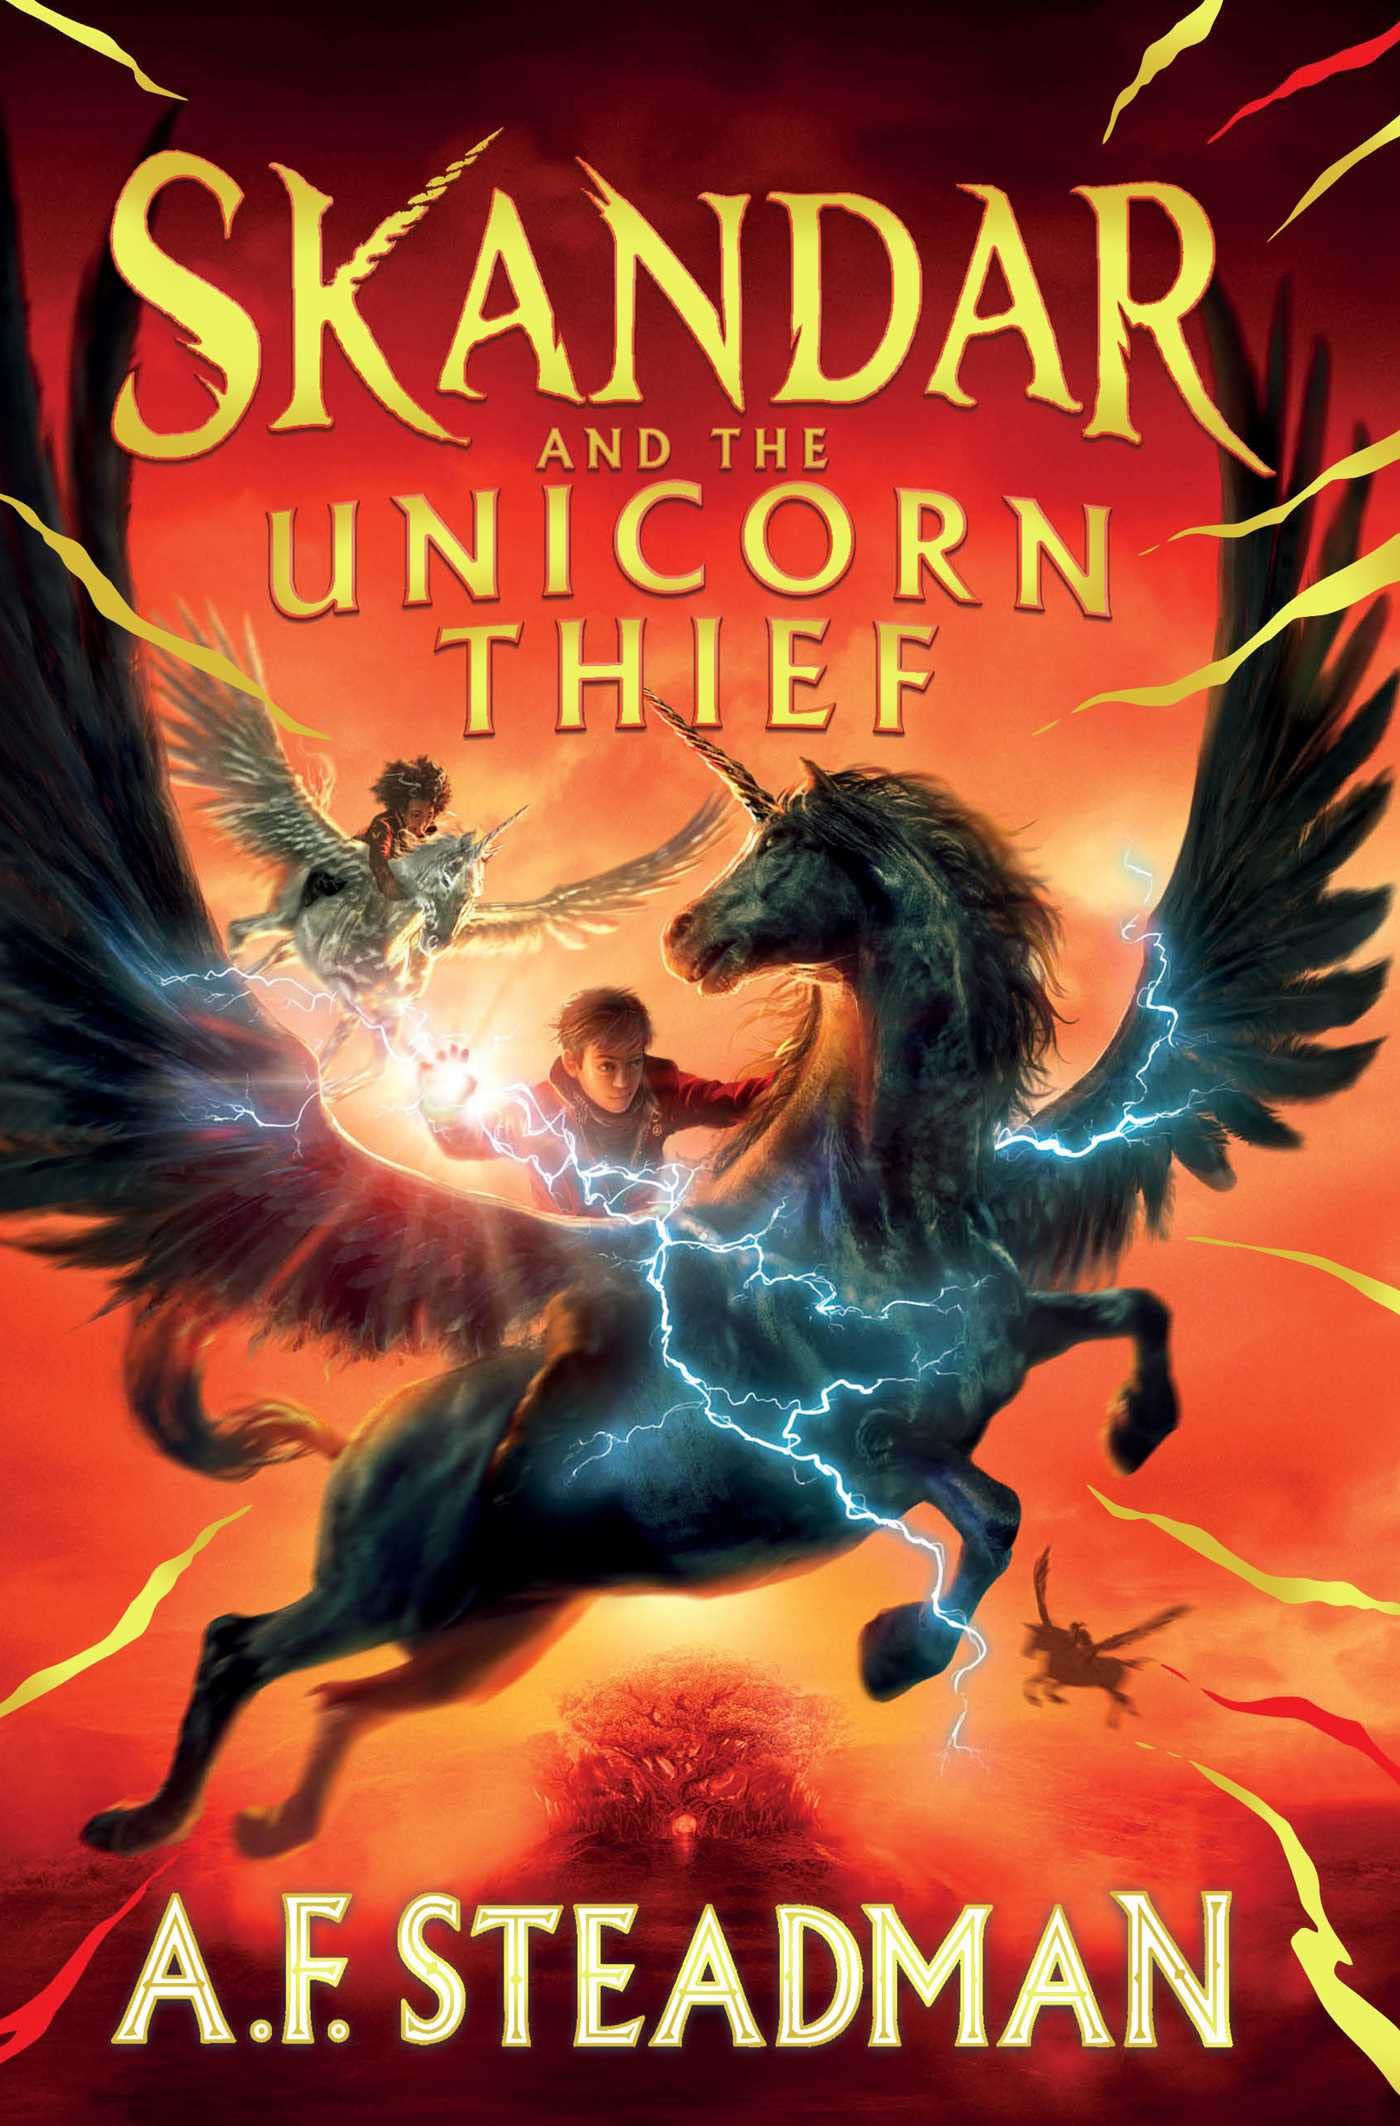 Image for "Skandar and the Unicorn Thief"